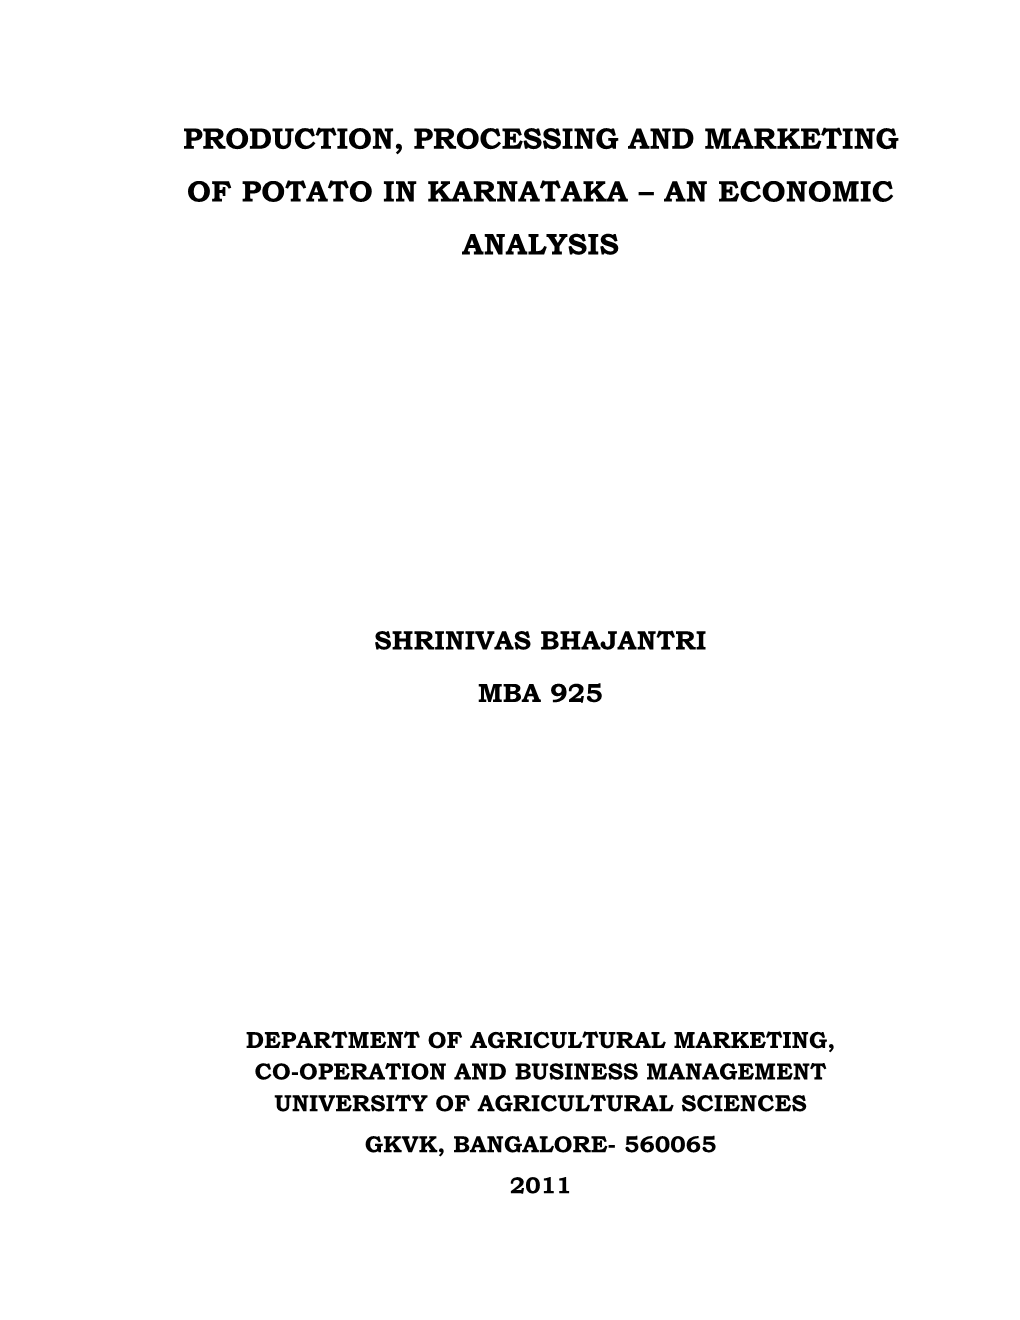 Production, Processing and Marketing of Potato in Karnataka – an Economic Analysis